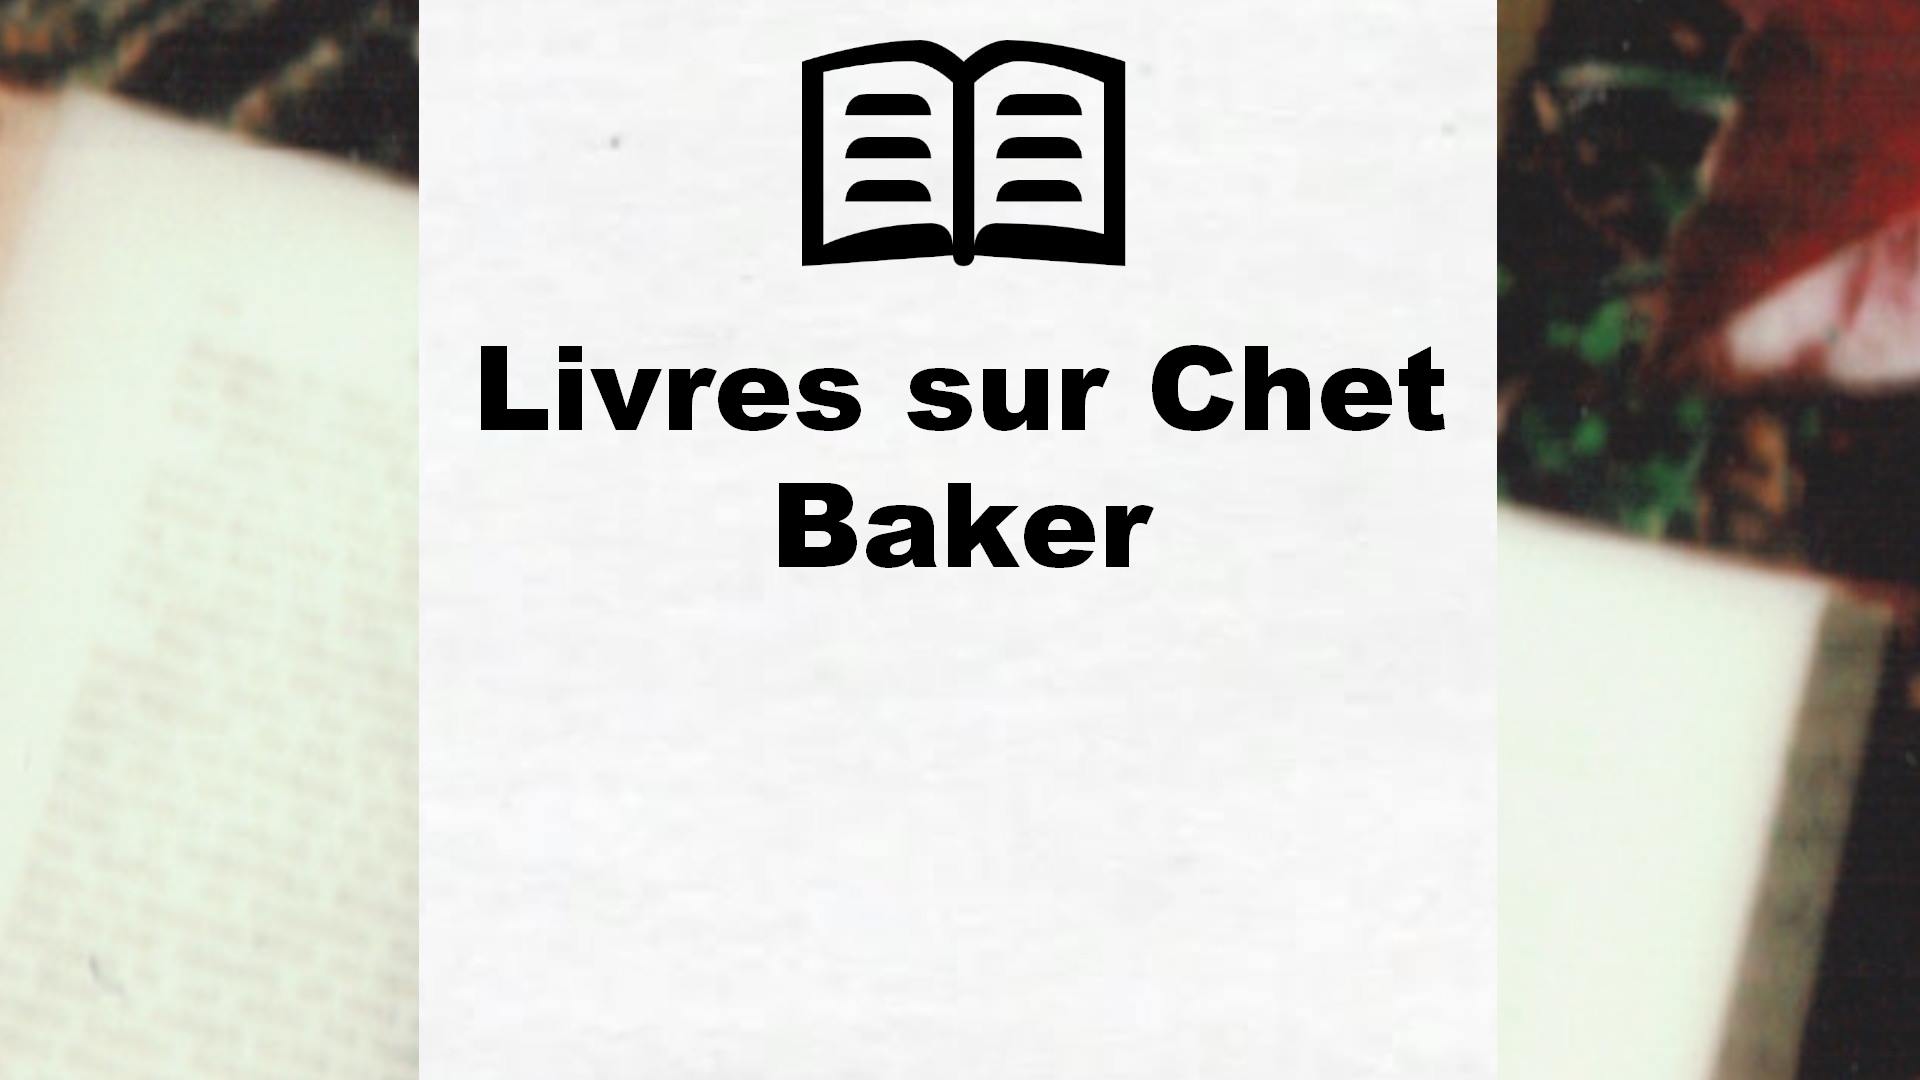 Livres sur Chet Baker